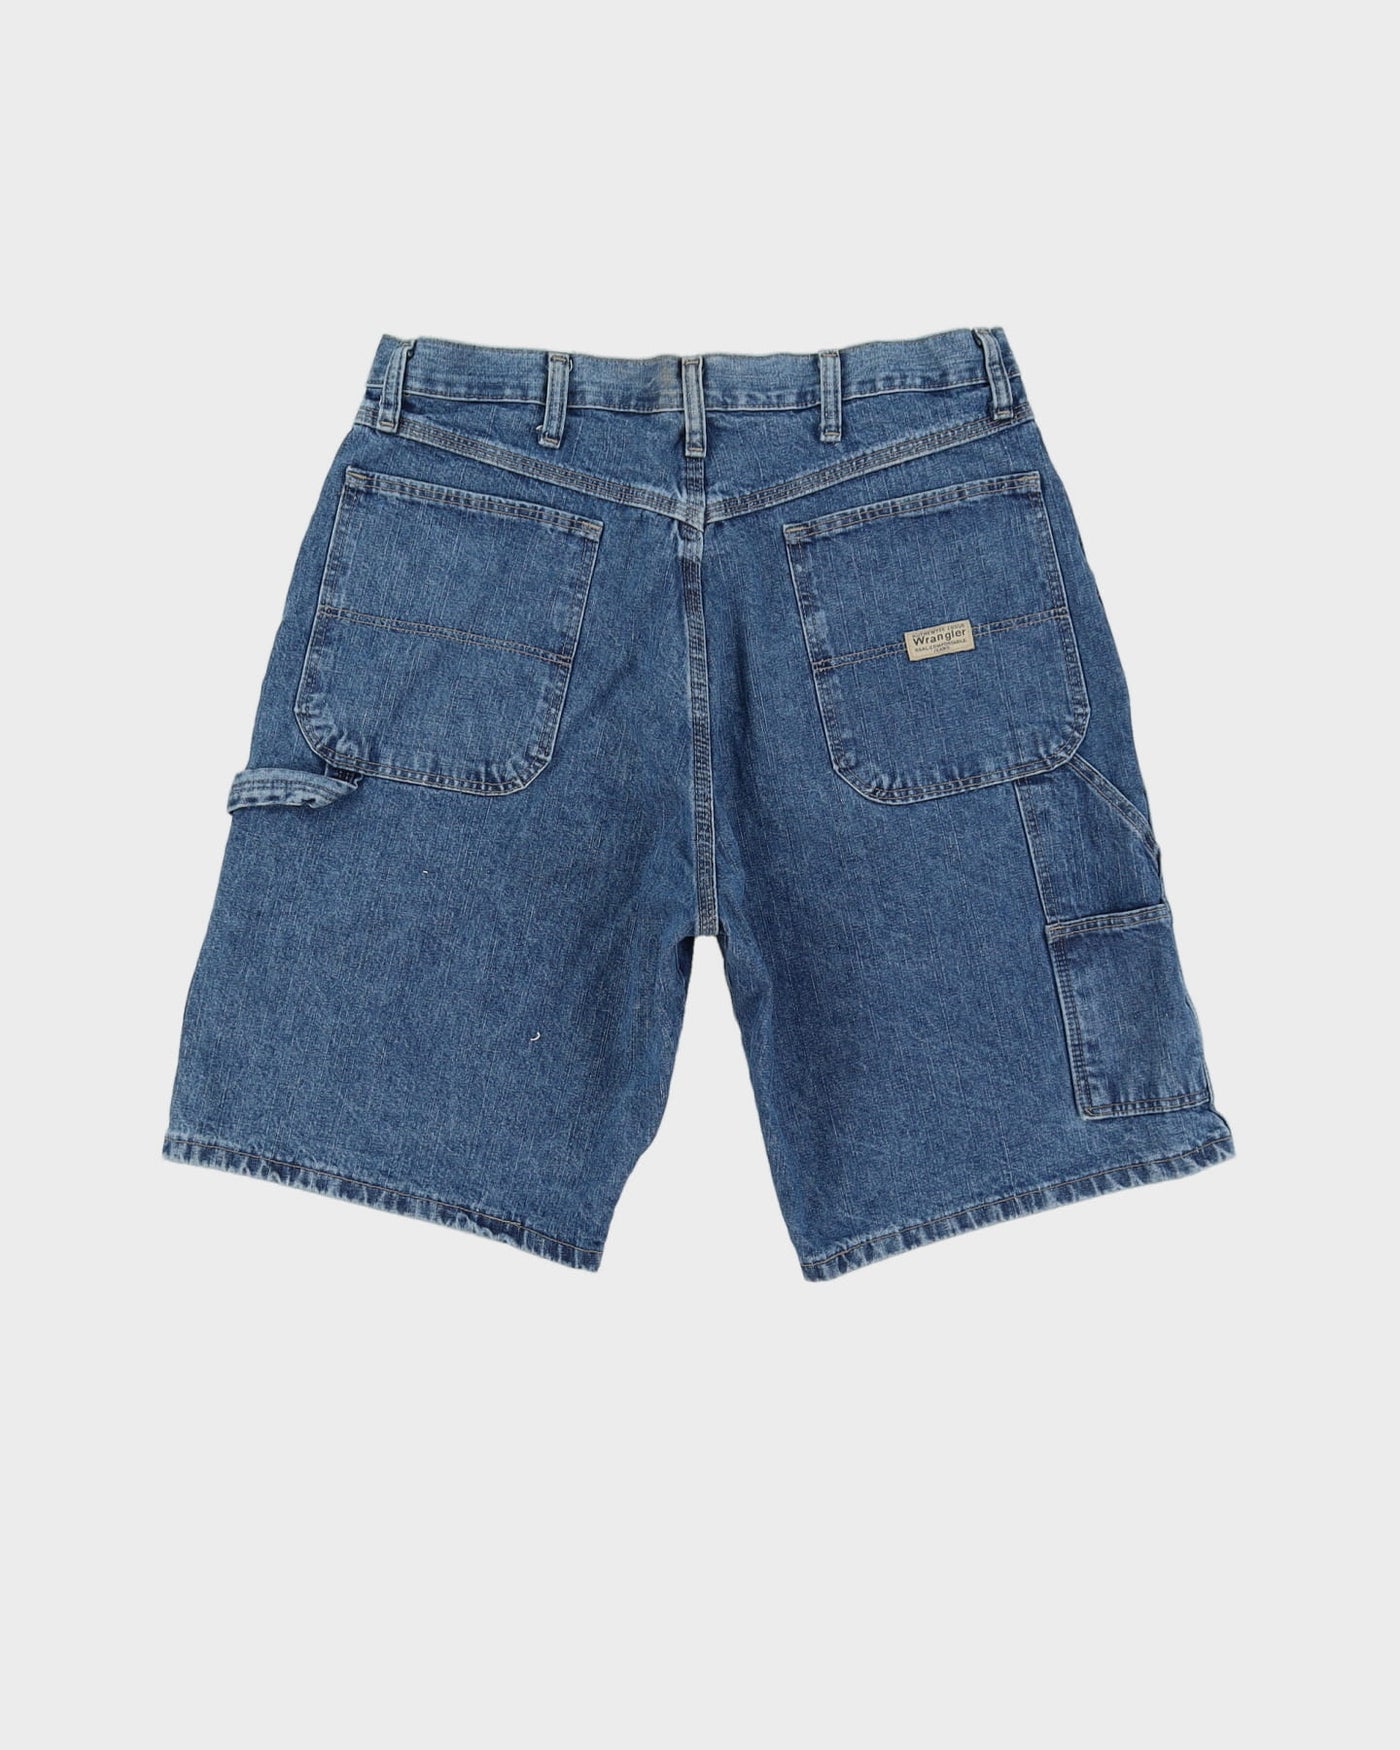 Pre-Loved Wrangler Blue Denim Shorts - W34